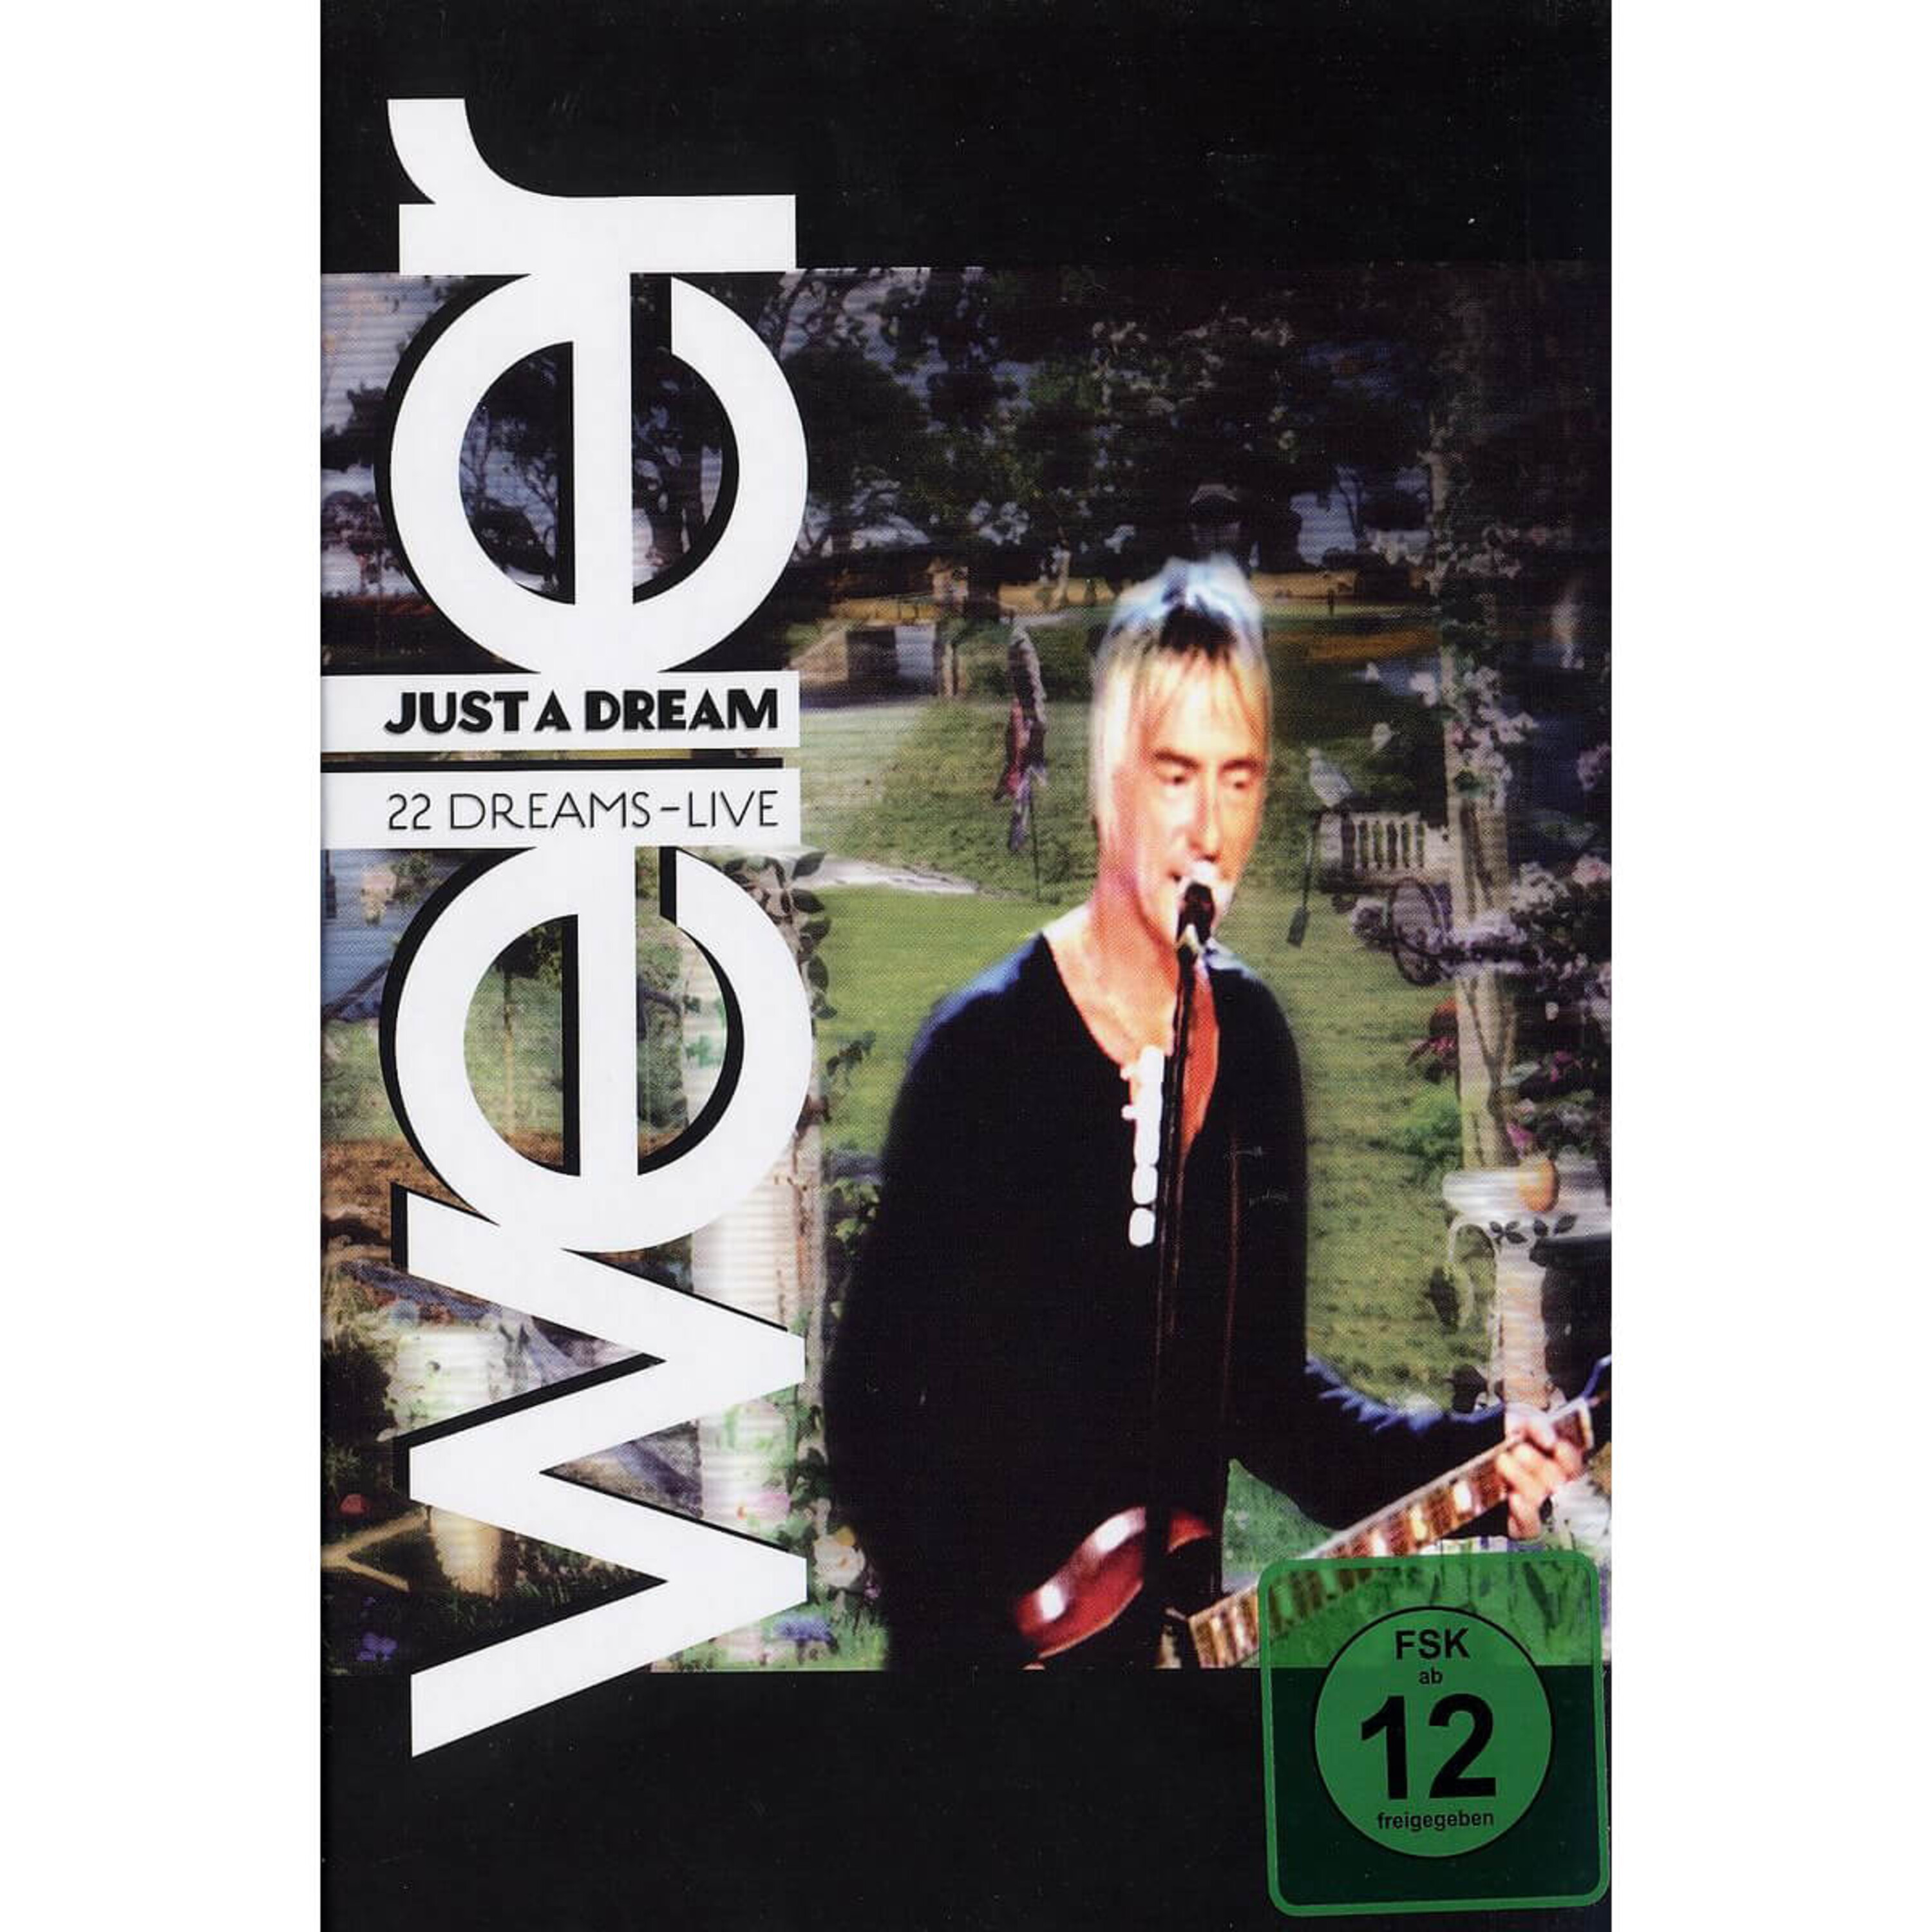 Bravado - Just A Dream - 22 Dreams Live (Ltd. Deluxe Edition DVD+CD) - Paul  Weller - DVD + CD